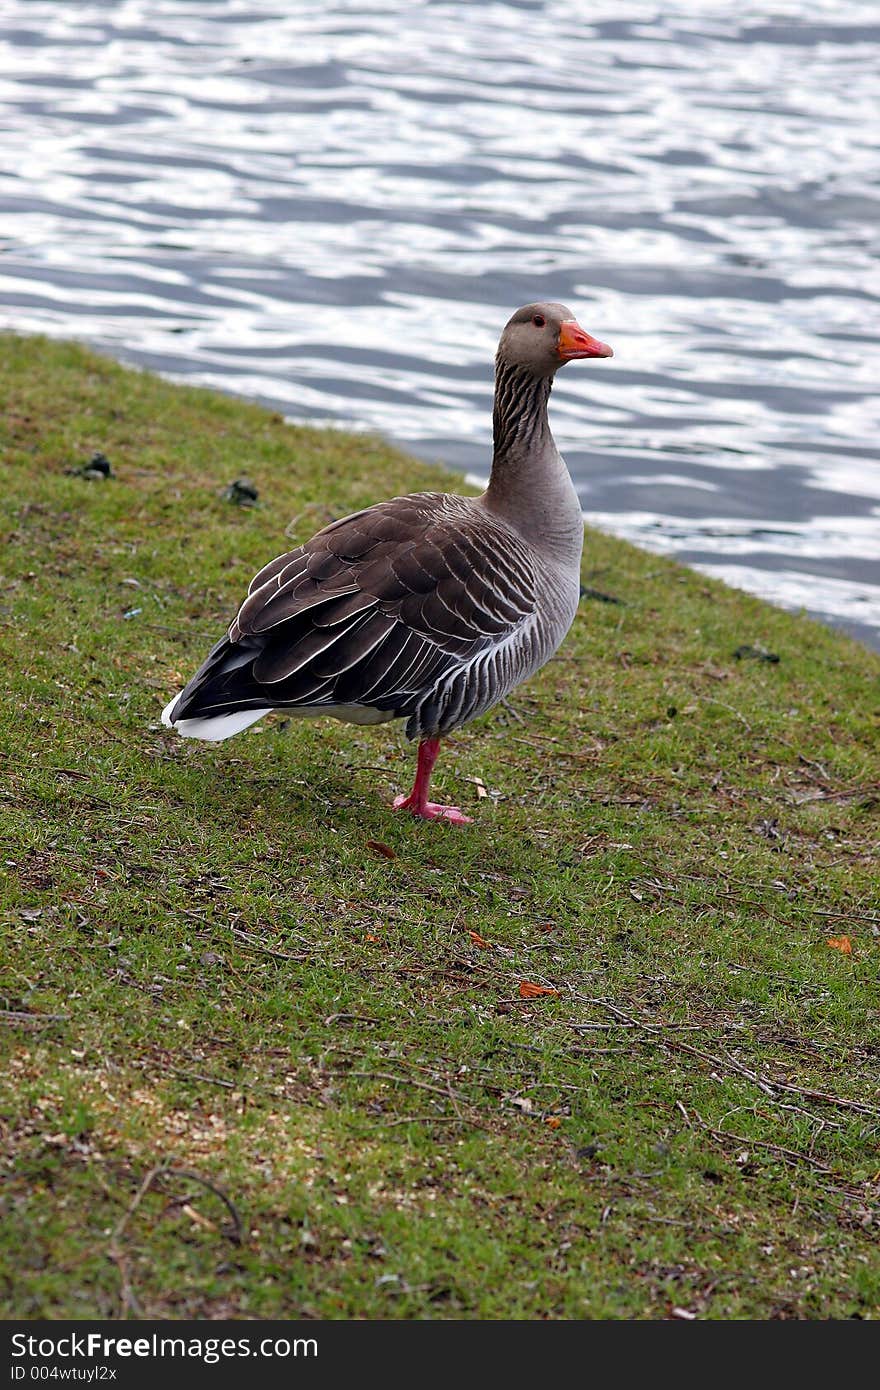 Goose, standing on one leg